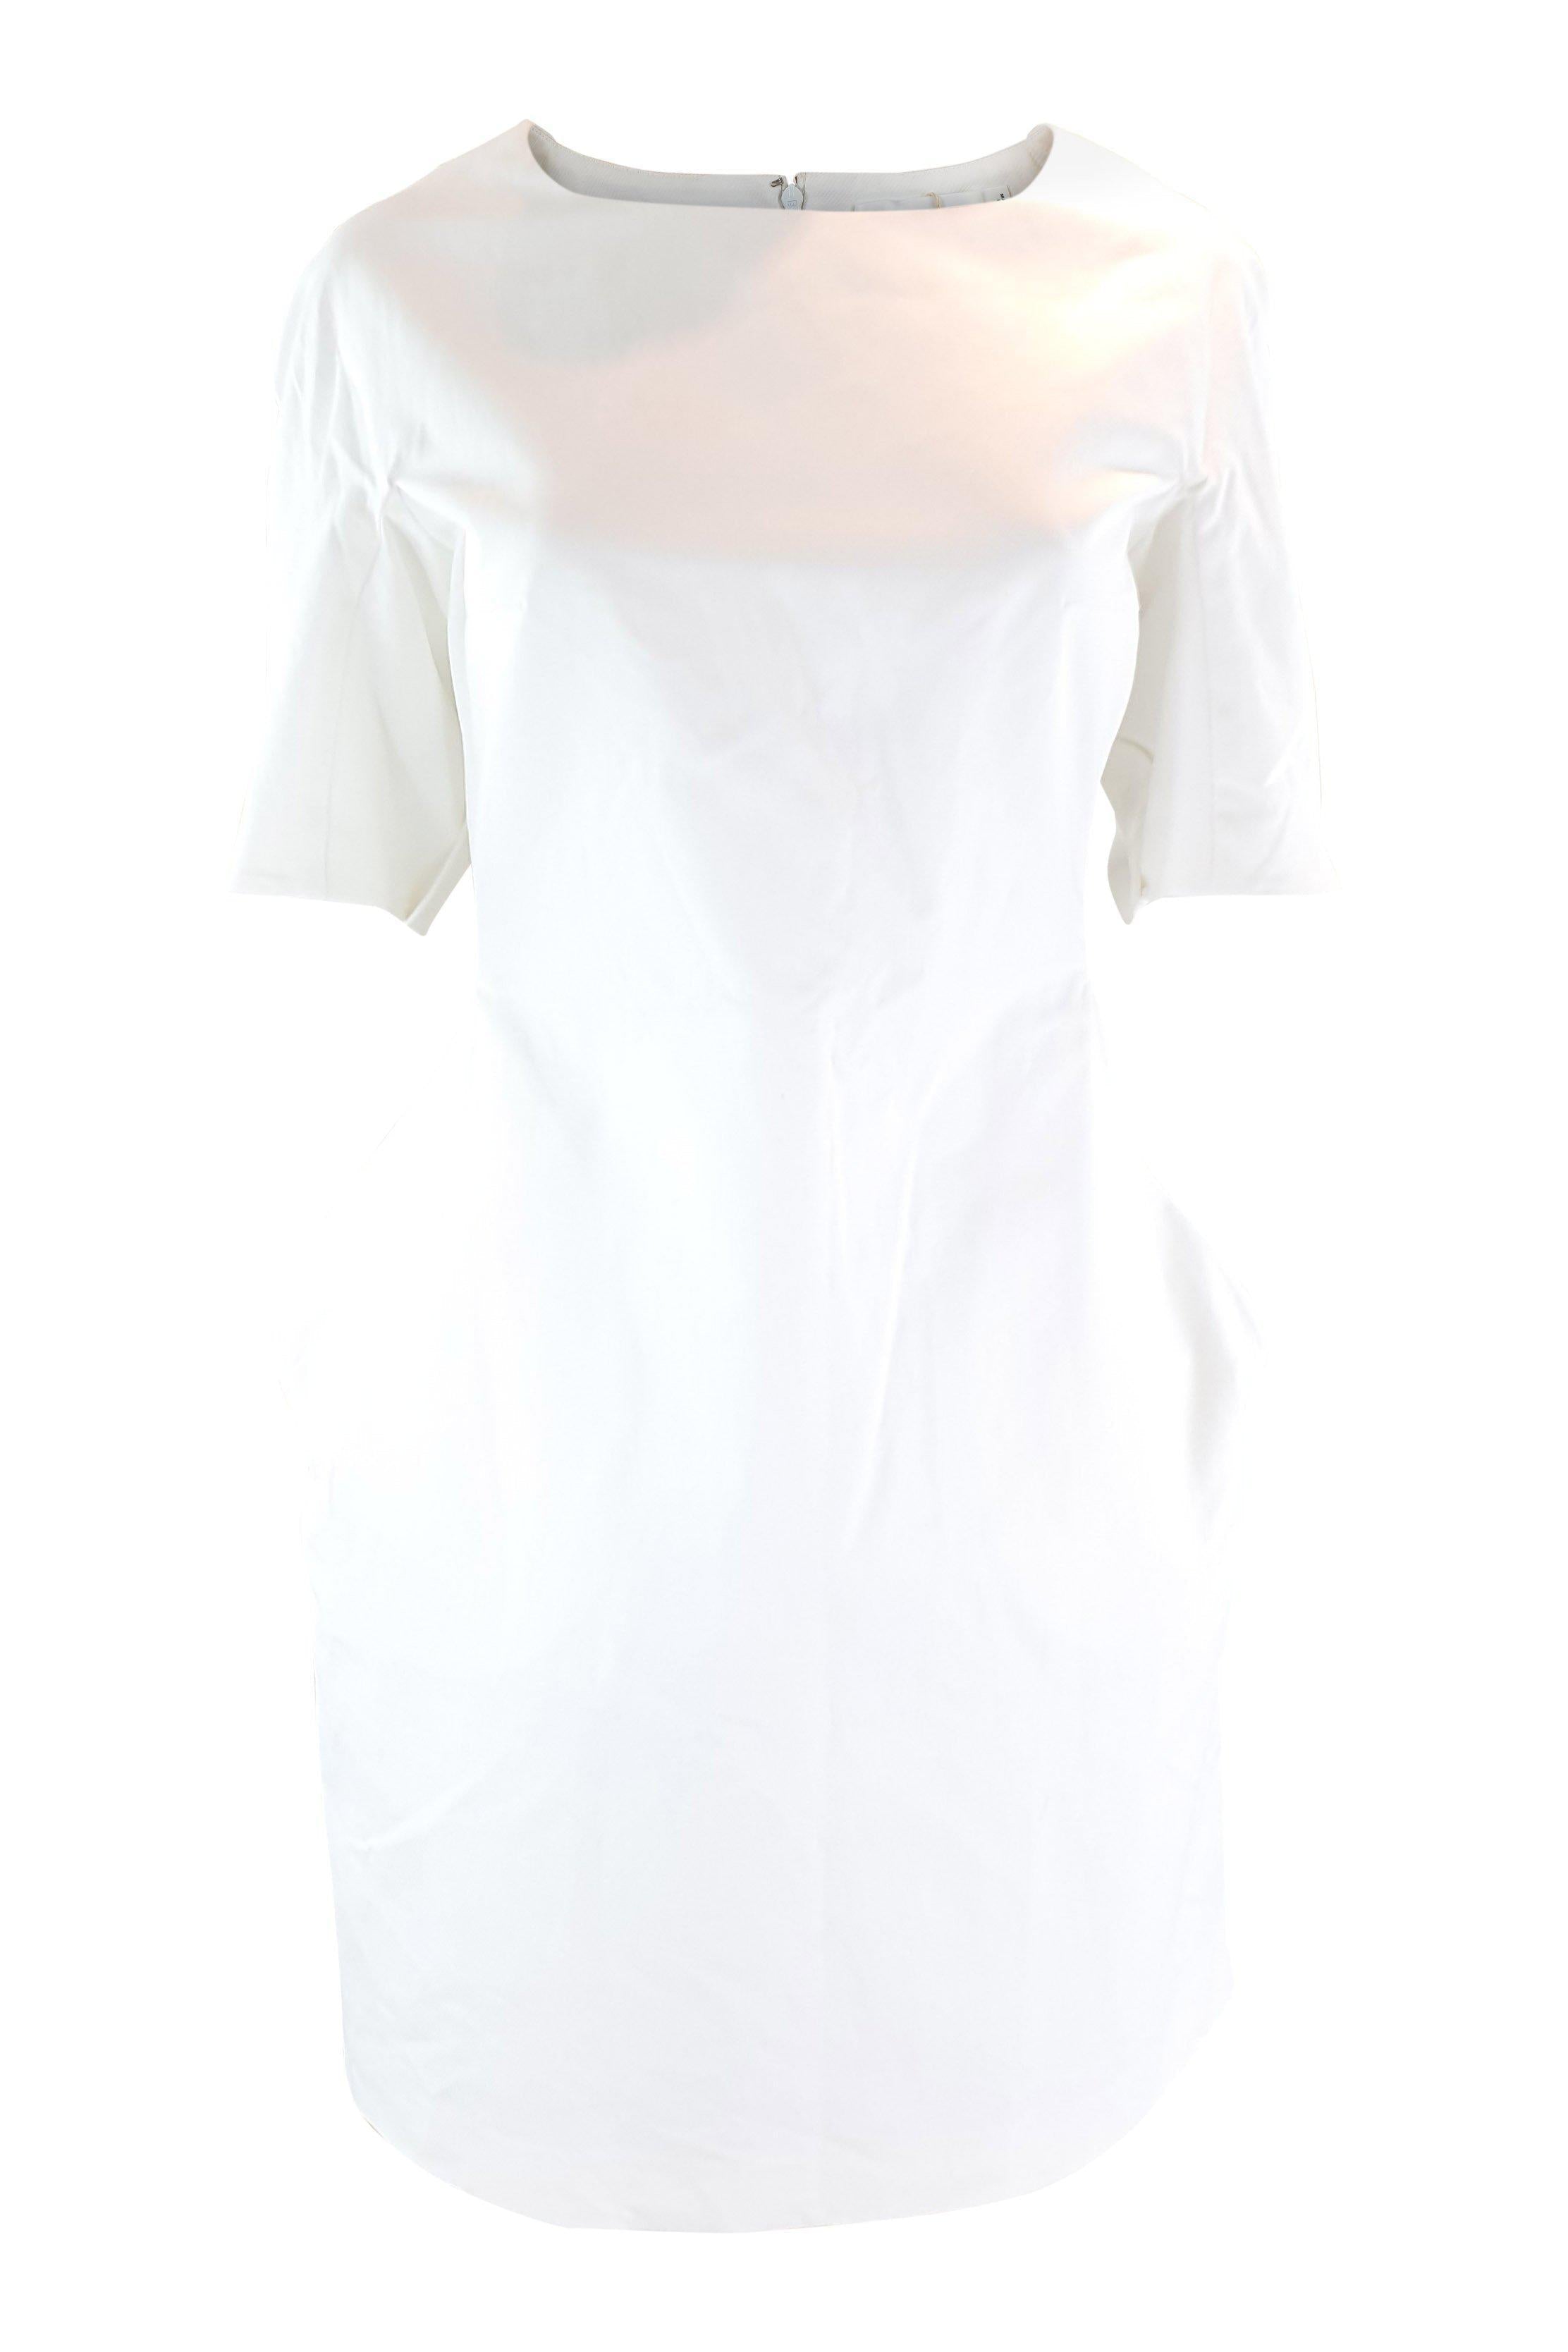 JIL SANDER S/S 2013 White Cotton Blend Sculptured Kimono Dress (DE 38)-Jil Sander-The Freperie